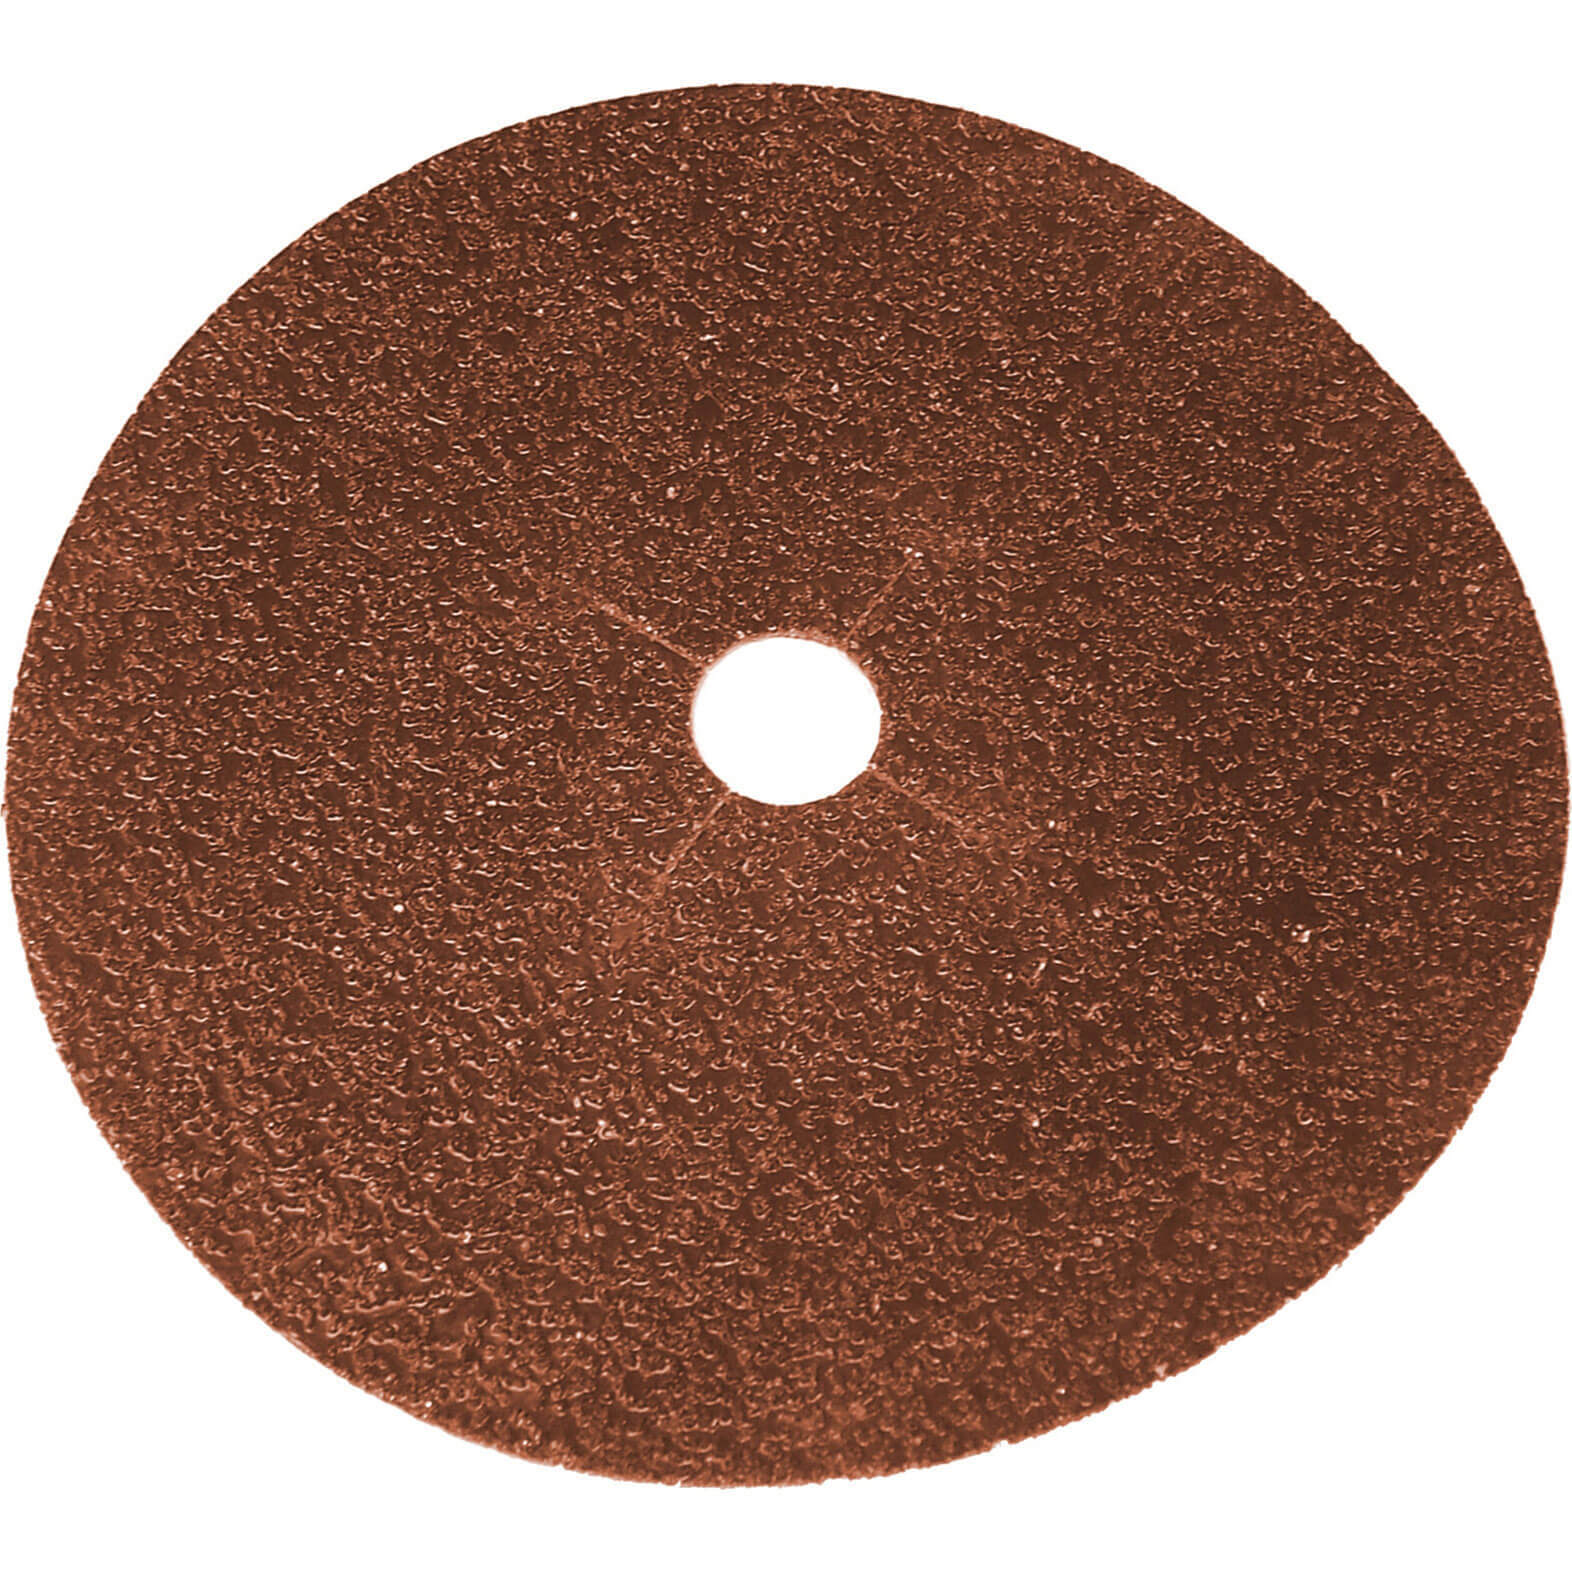 Photo of Faithfull Aluminium Oxide Sanding Discs 178mm 80g